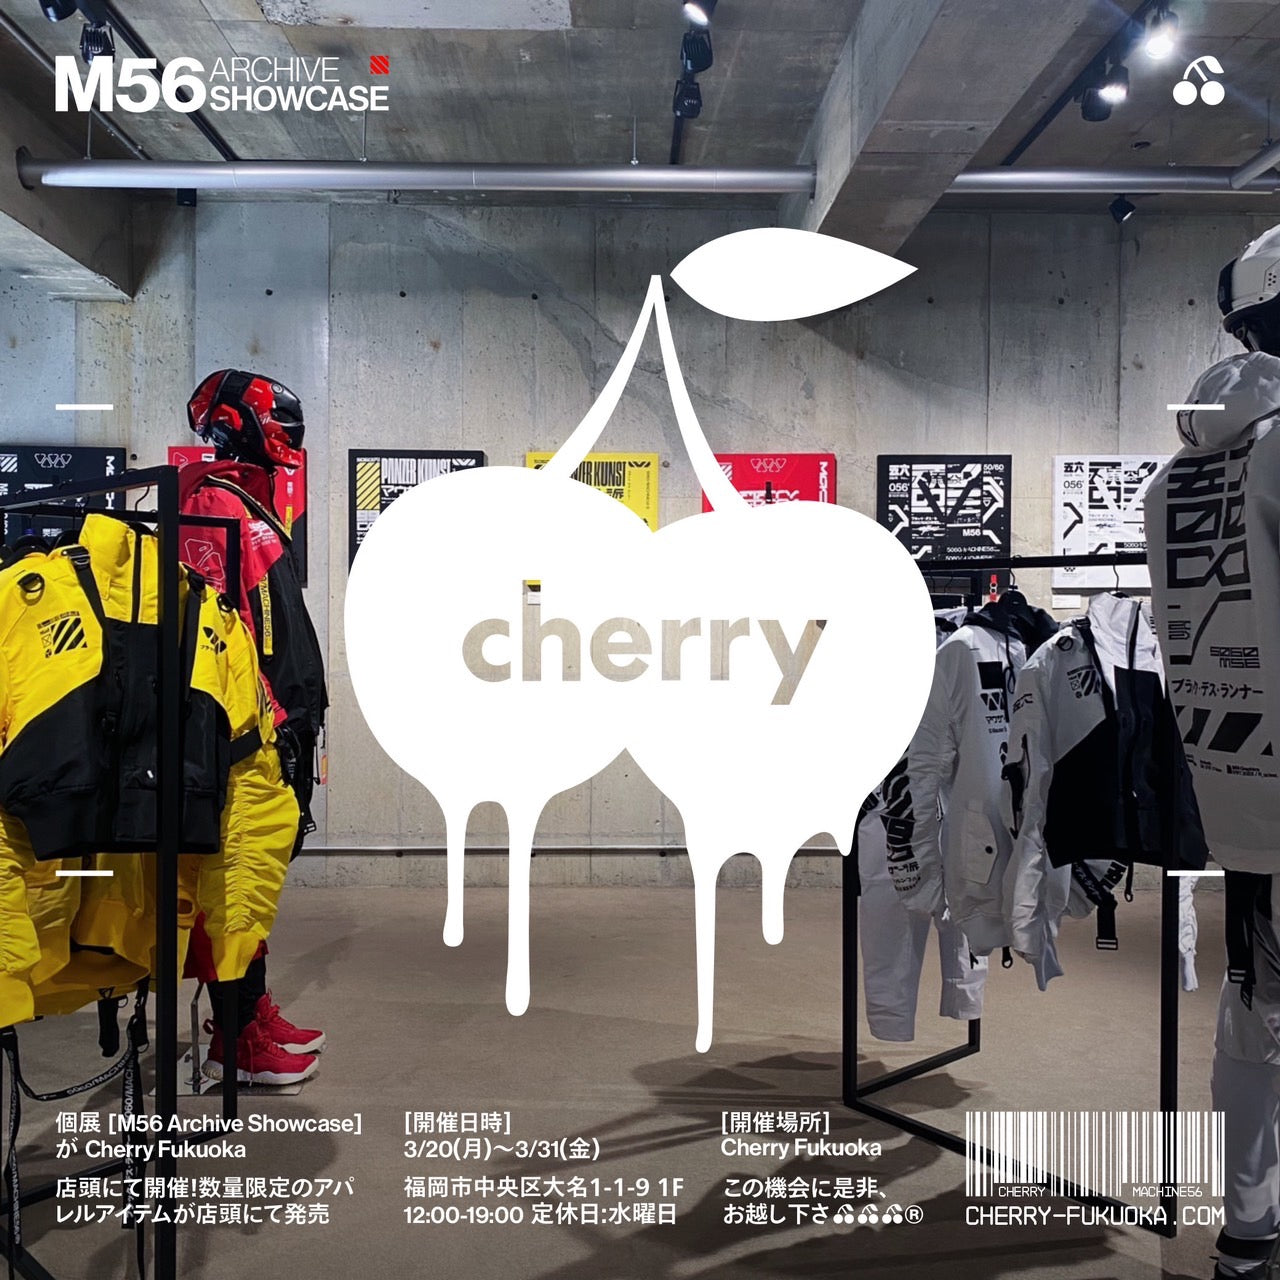 【Machine56】<br>店頭にて開催中の個展『M56 Archive Showcase』は3月31日(金)まで！